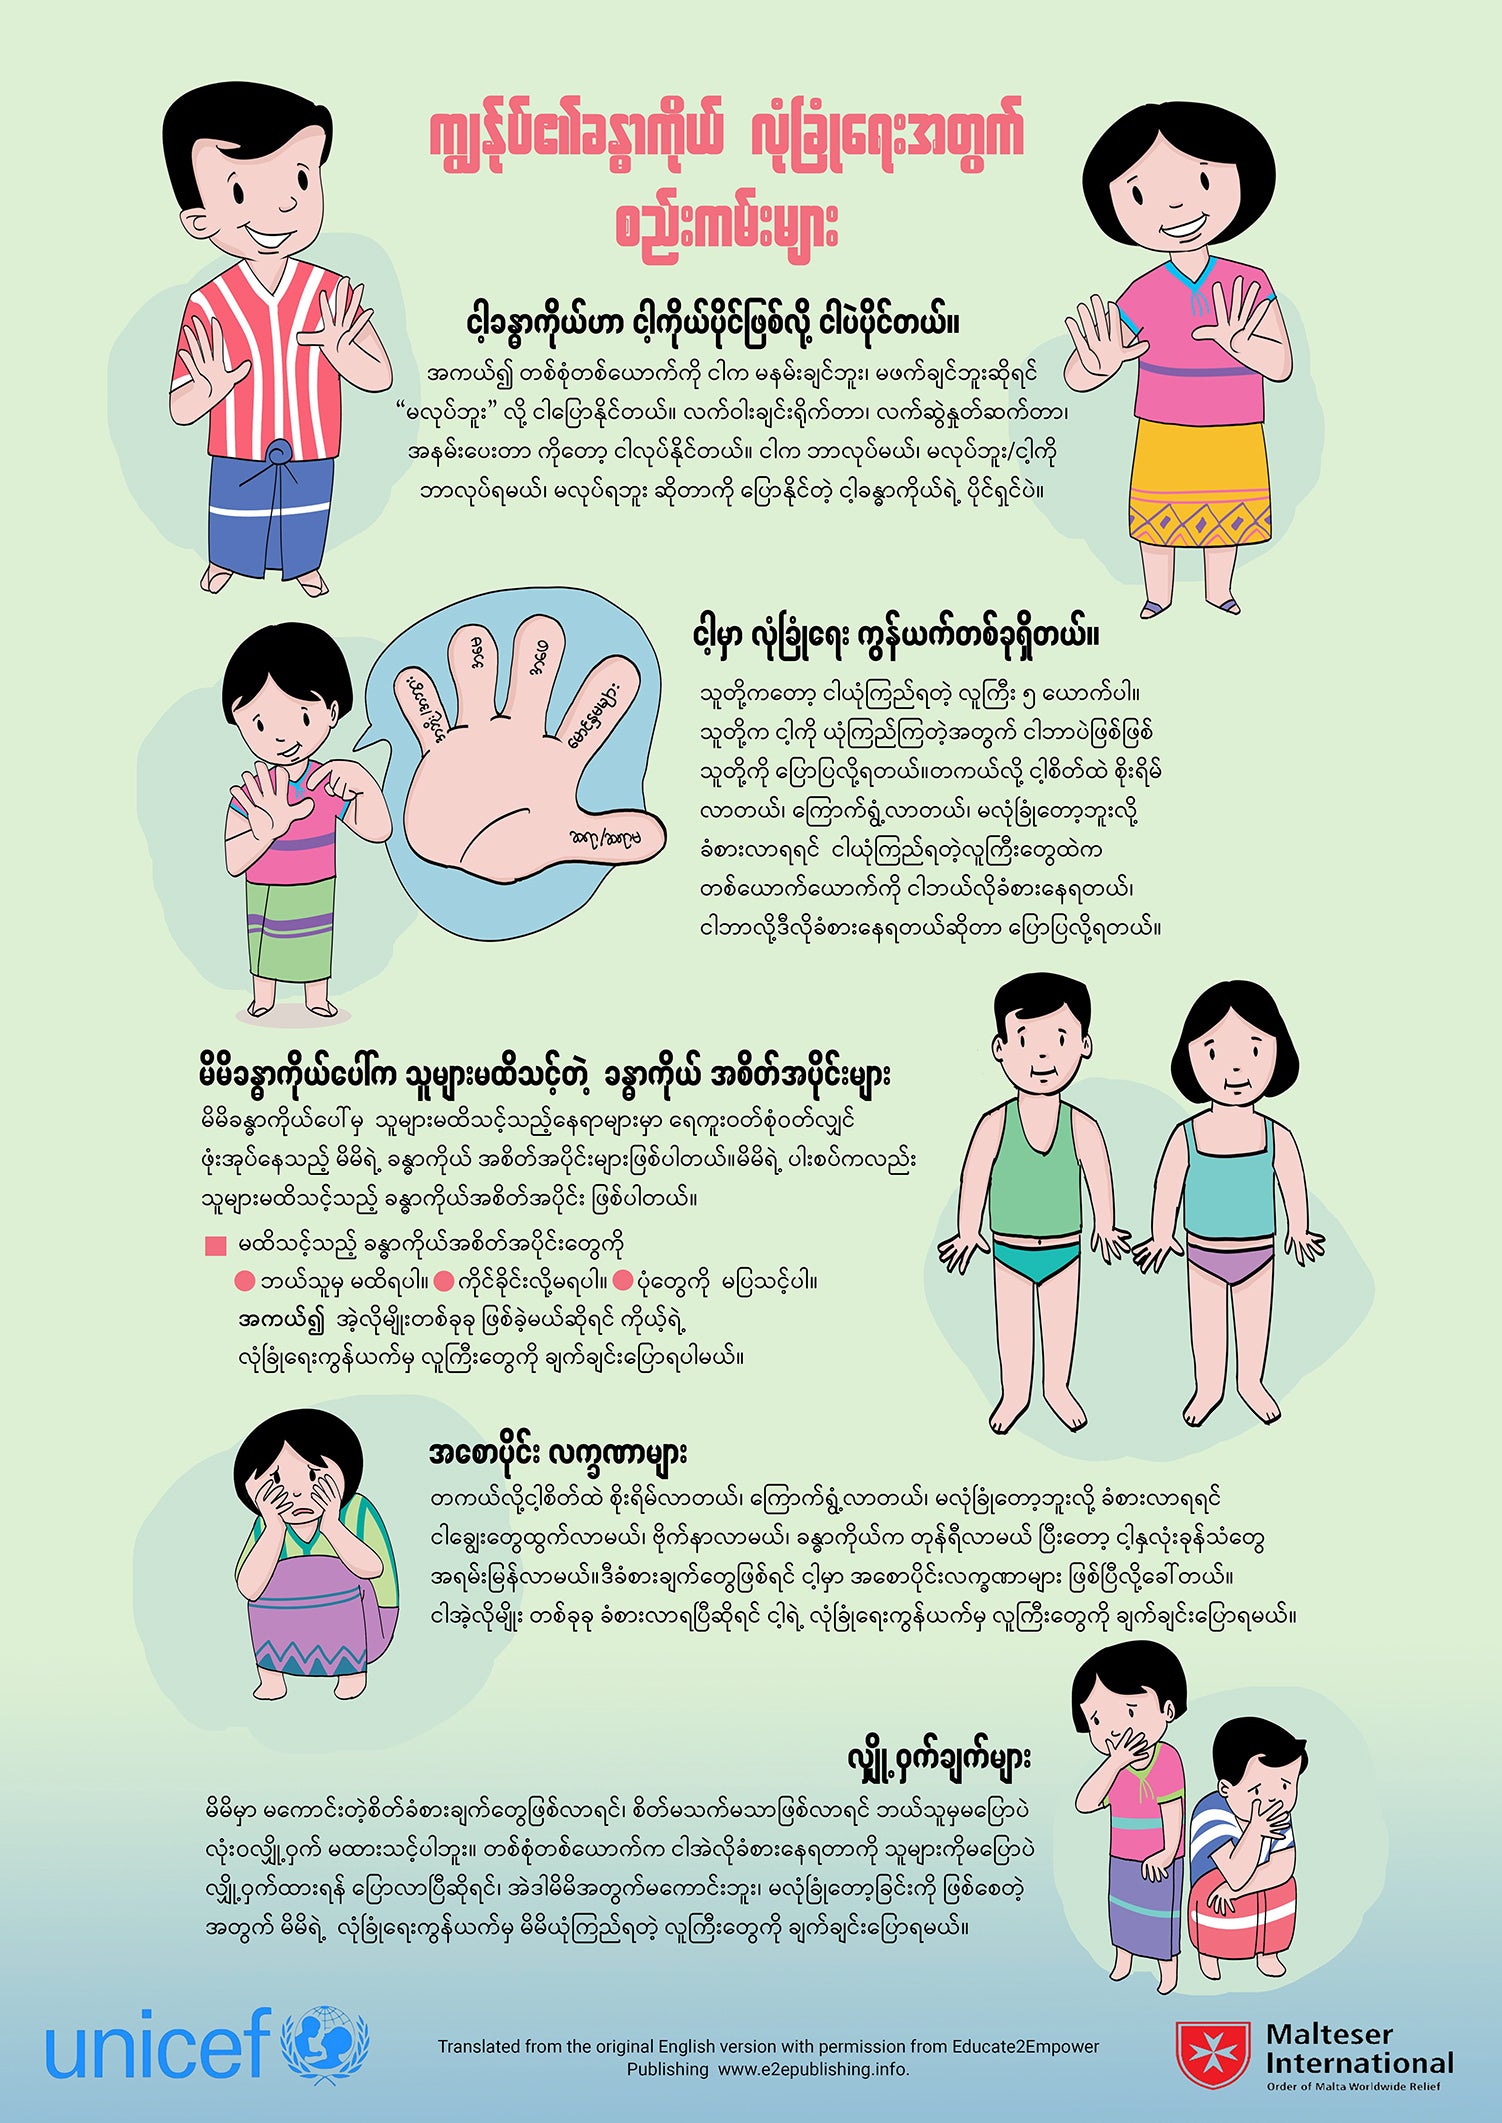 Body Safety Rules poster for children, written in the Burmese